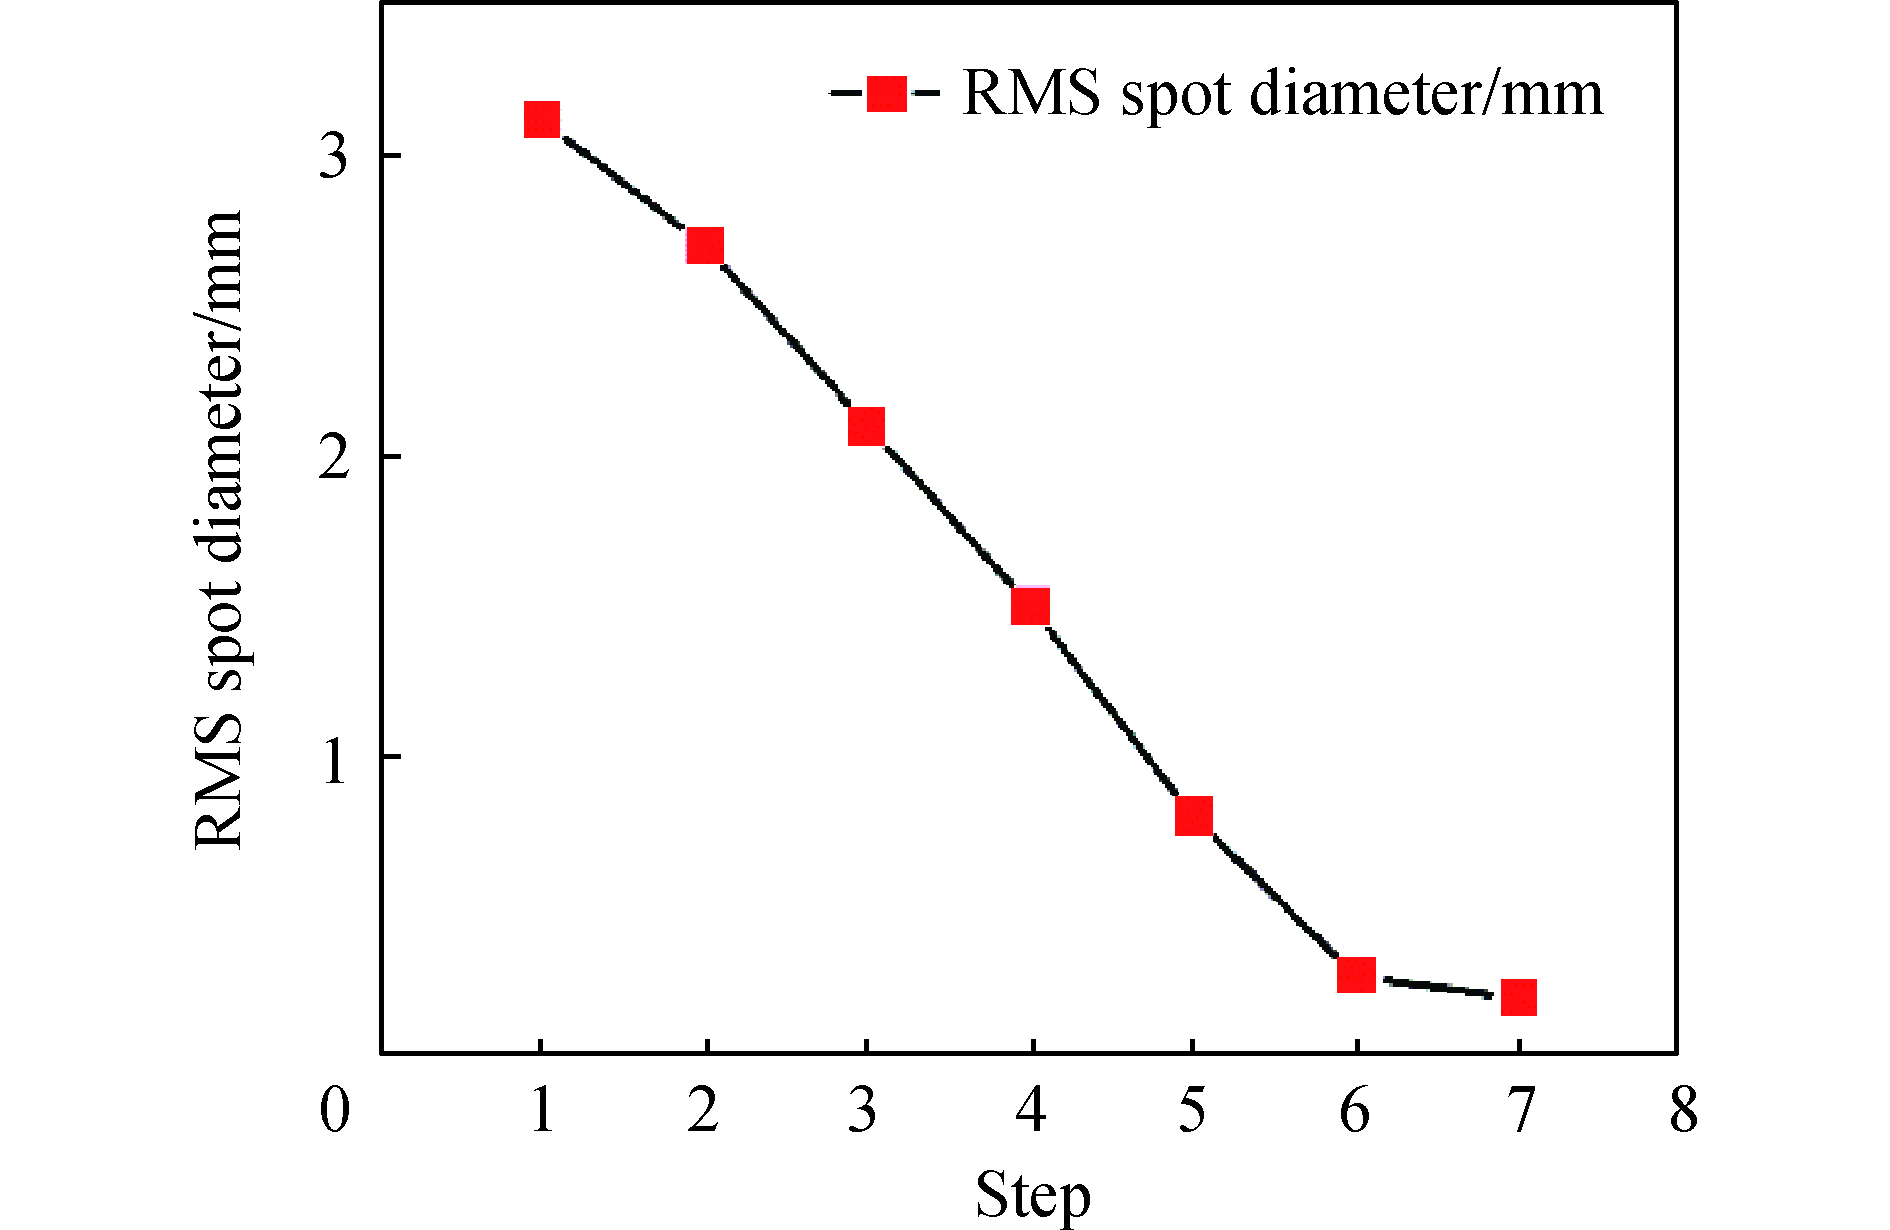 Change trend of RMS diameter of spot diagram